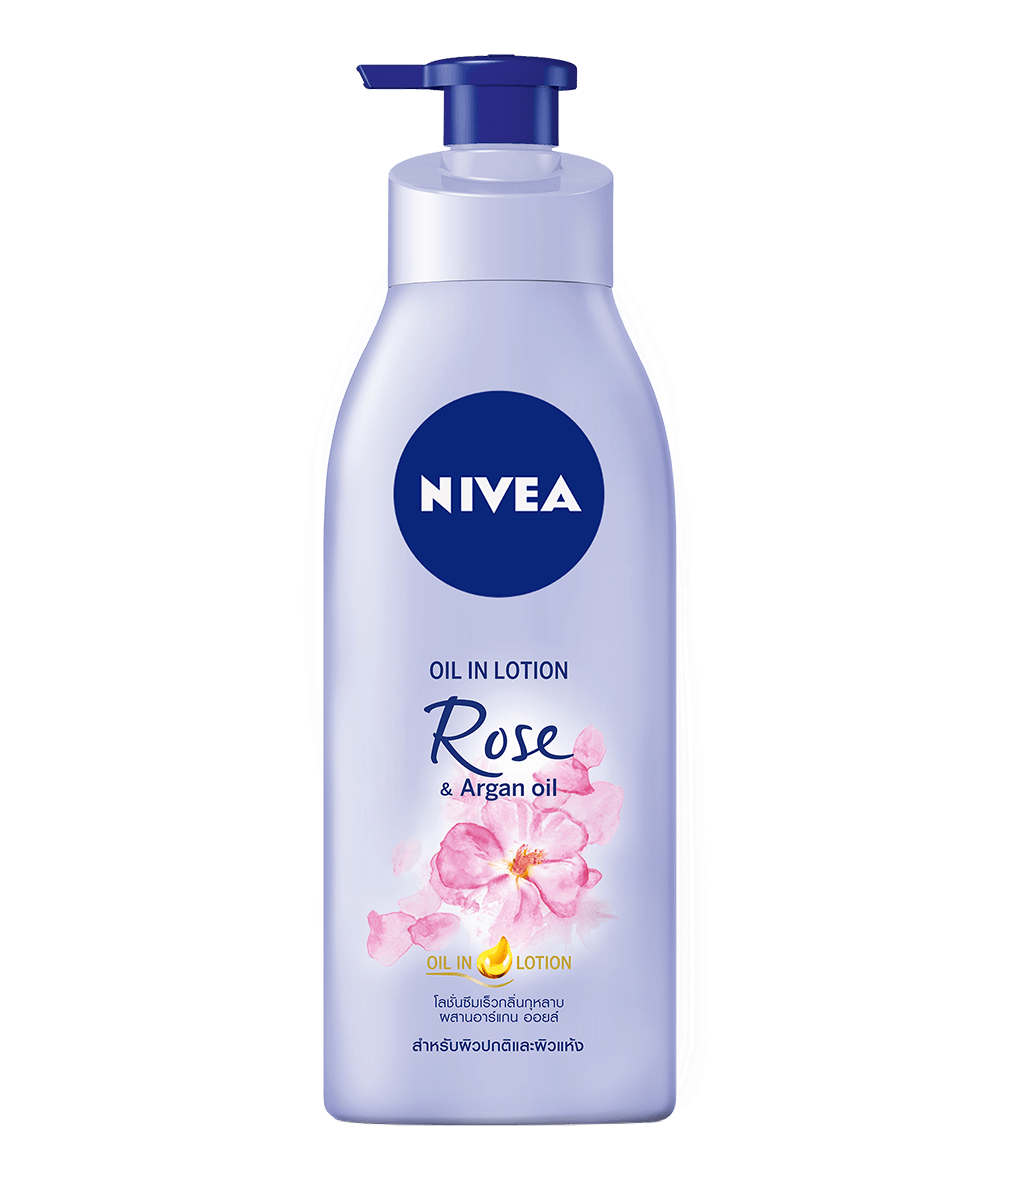 NIVEA Oil in lotion rose & argan oil